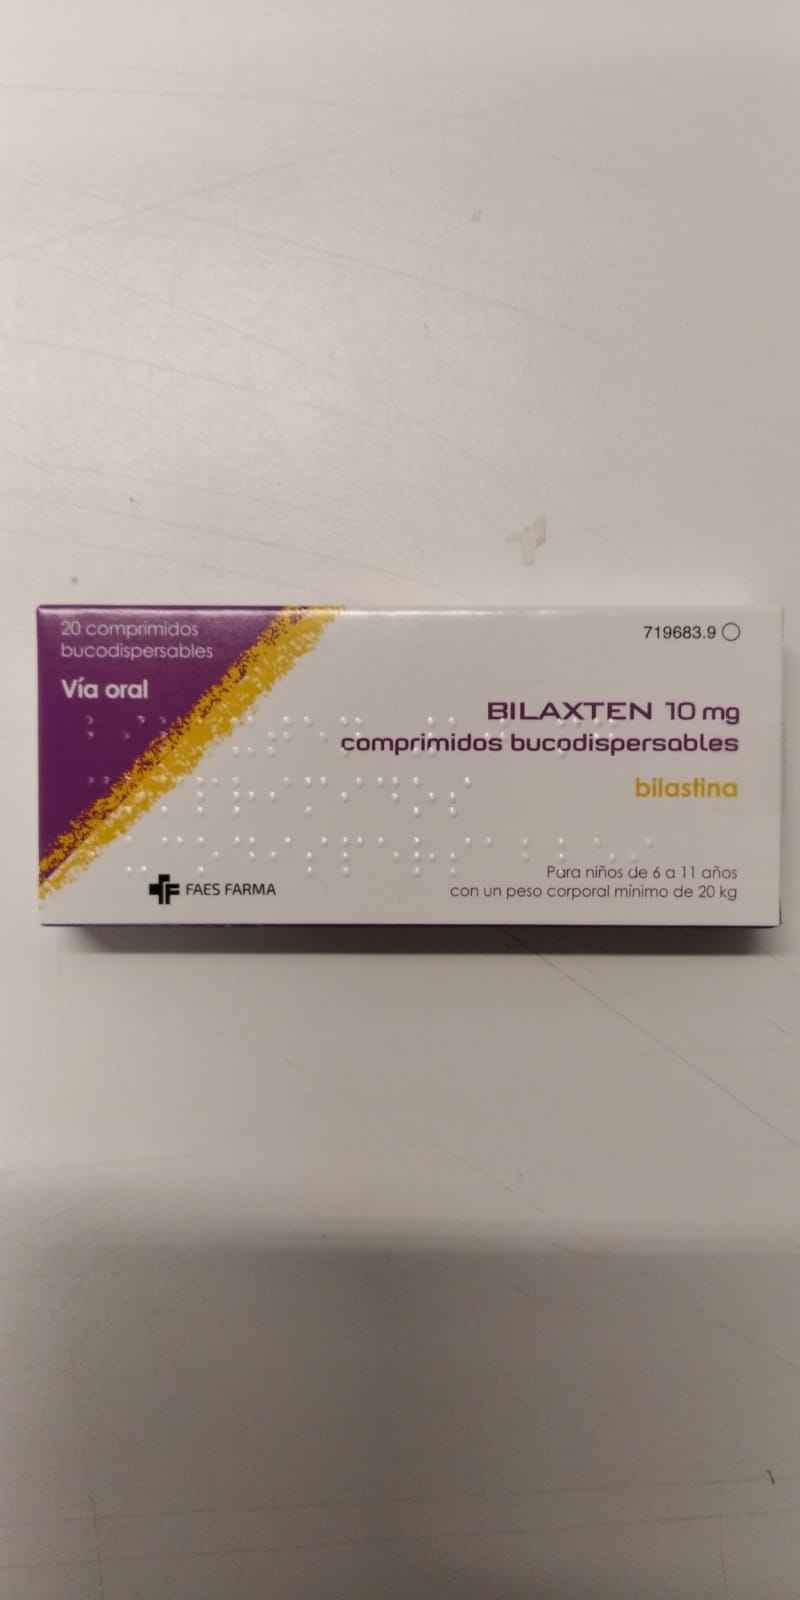 比拉斯汀口腔崩解片/ Bilastine Orally disintegrating Tablets/Opexa; Bilaxten; Antires; Bitosen